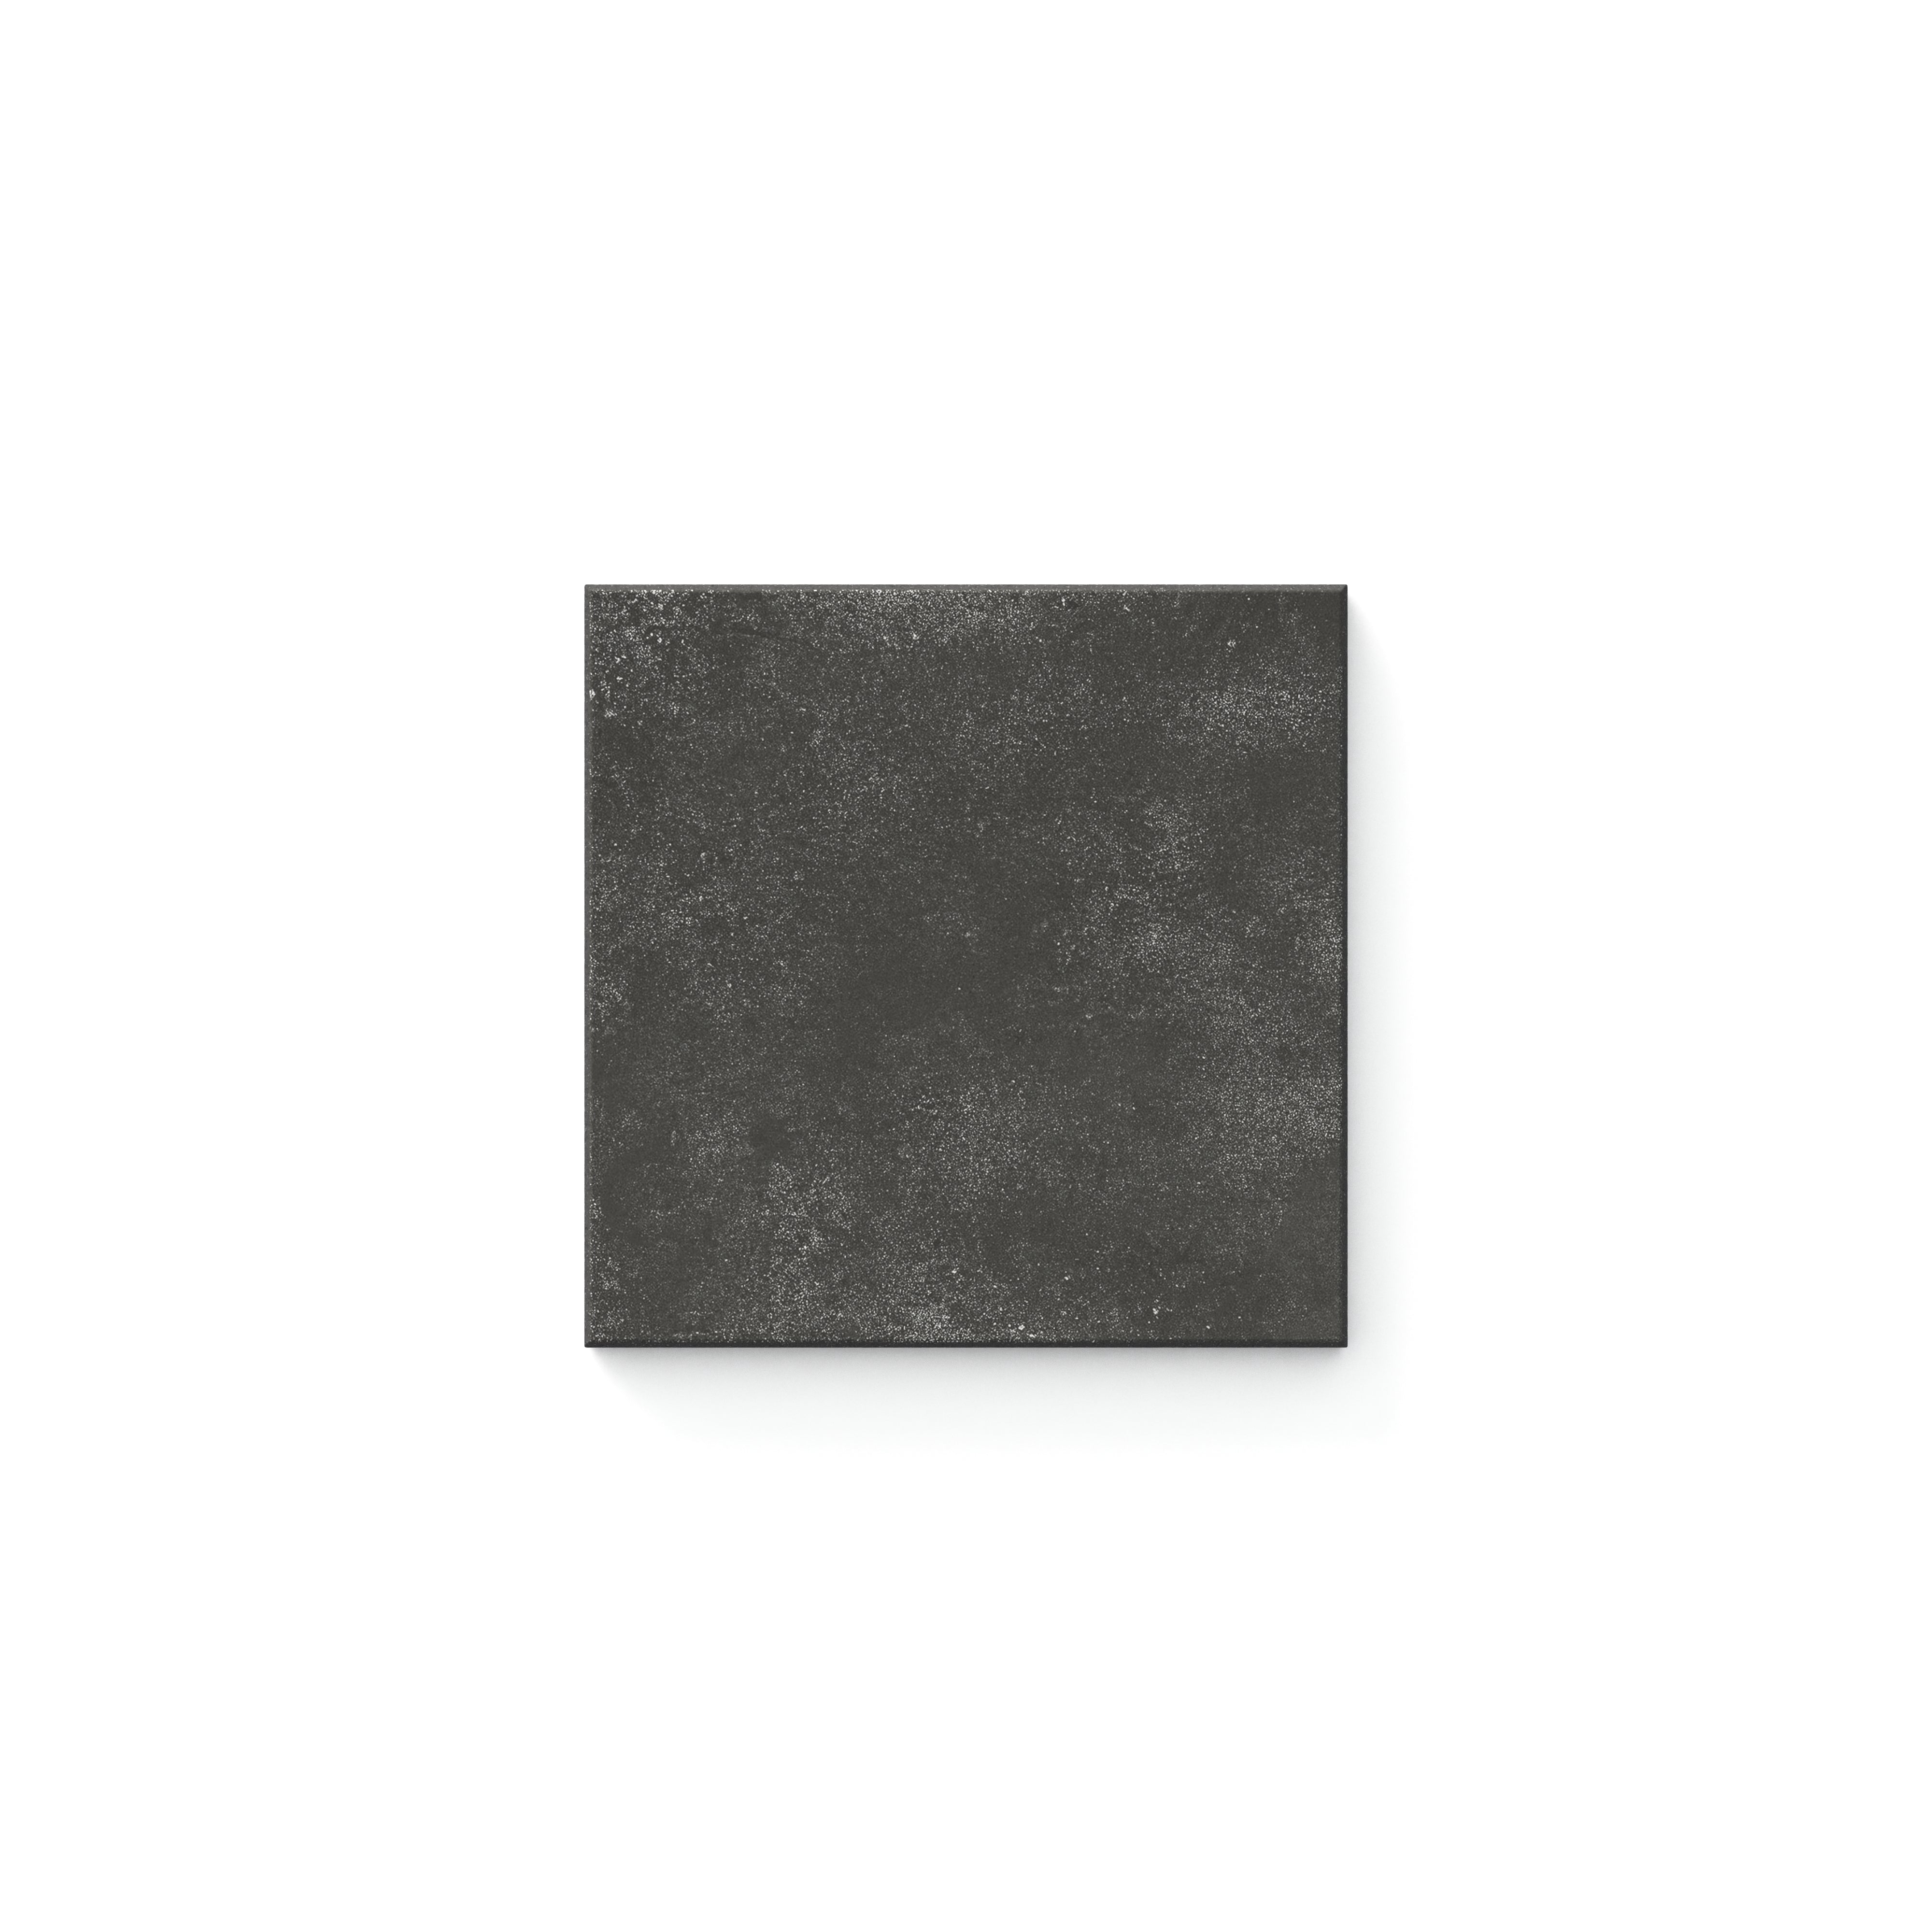 Ramsey Matte Coal 4x4 Tile Sample